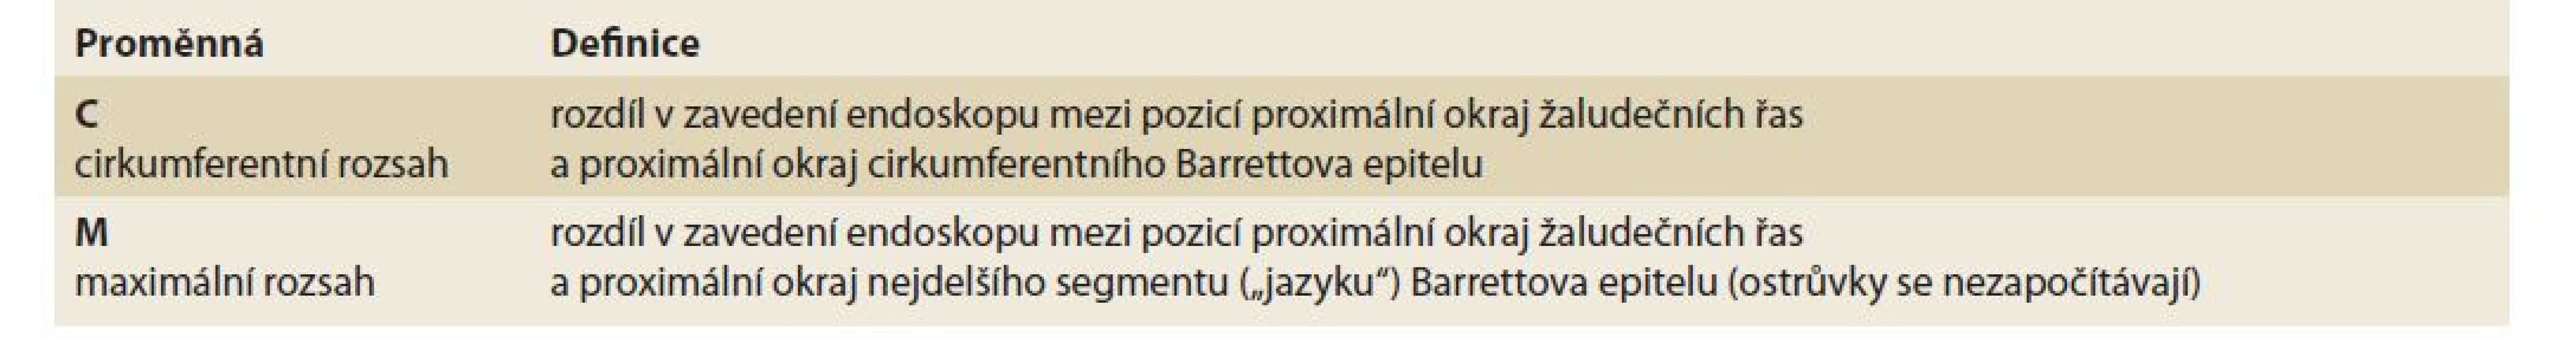 Pražská klasifikace.<br>
Tab. 5. Prague classification.